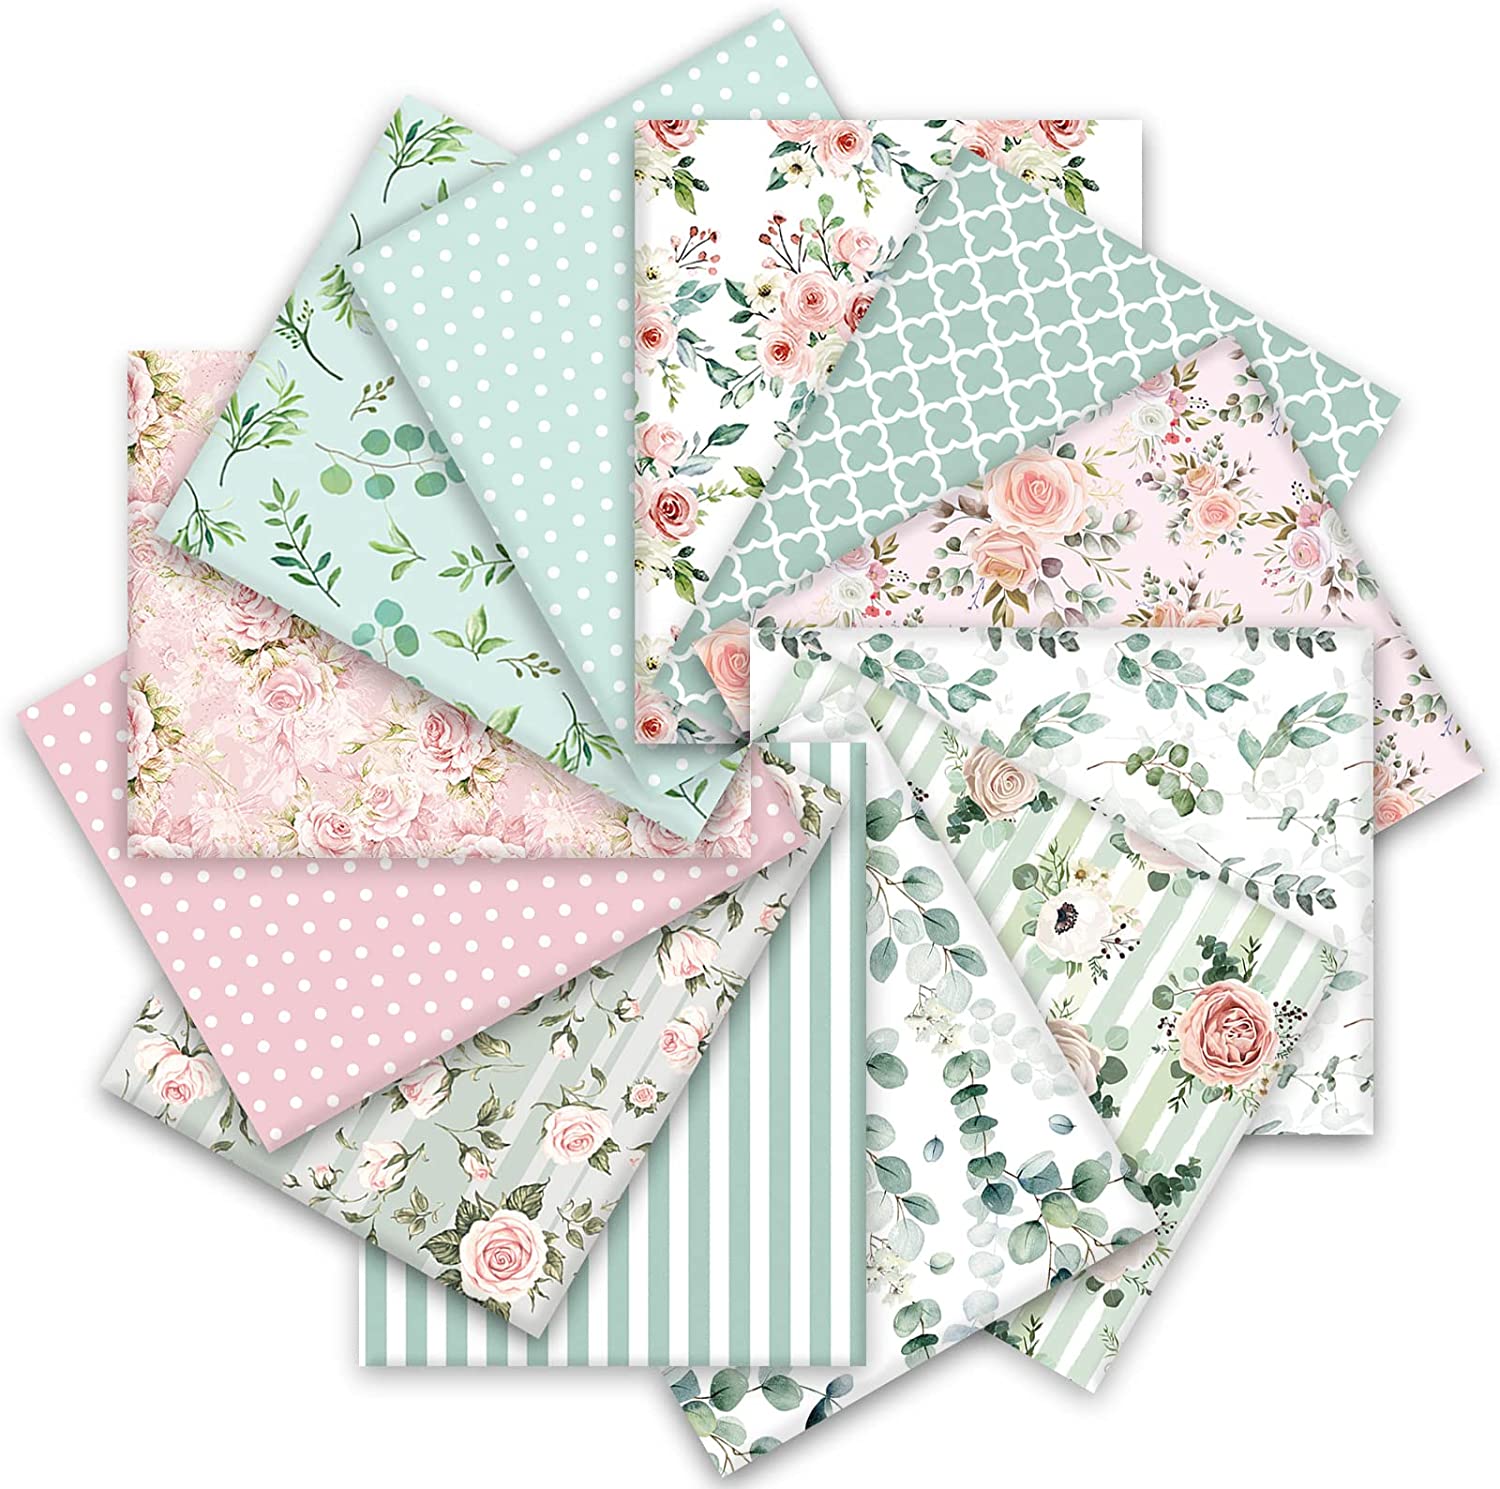 Spring Floral Fat Quarters Fabric Bundles 18 x 22 inches, Cotton Multi a